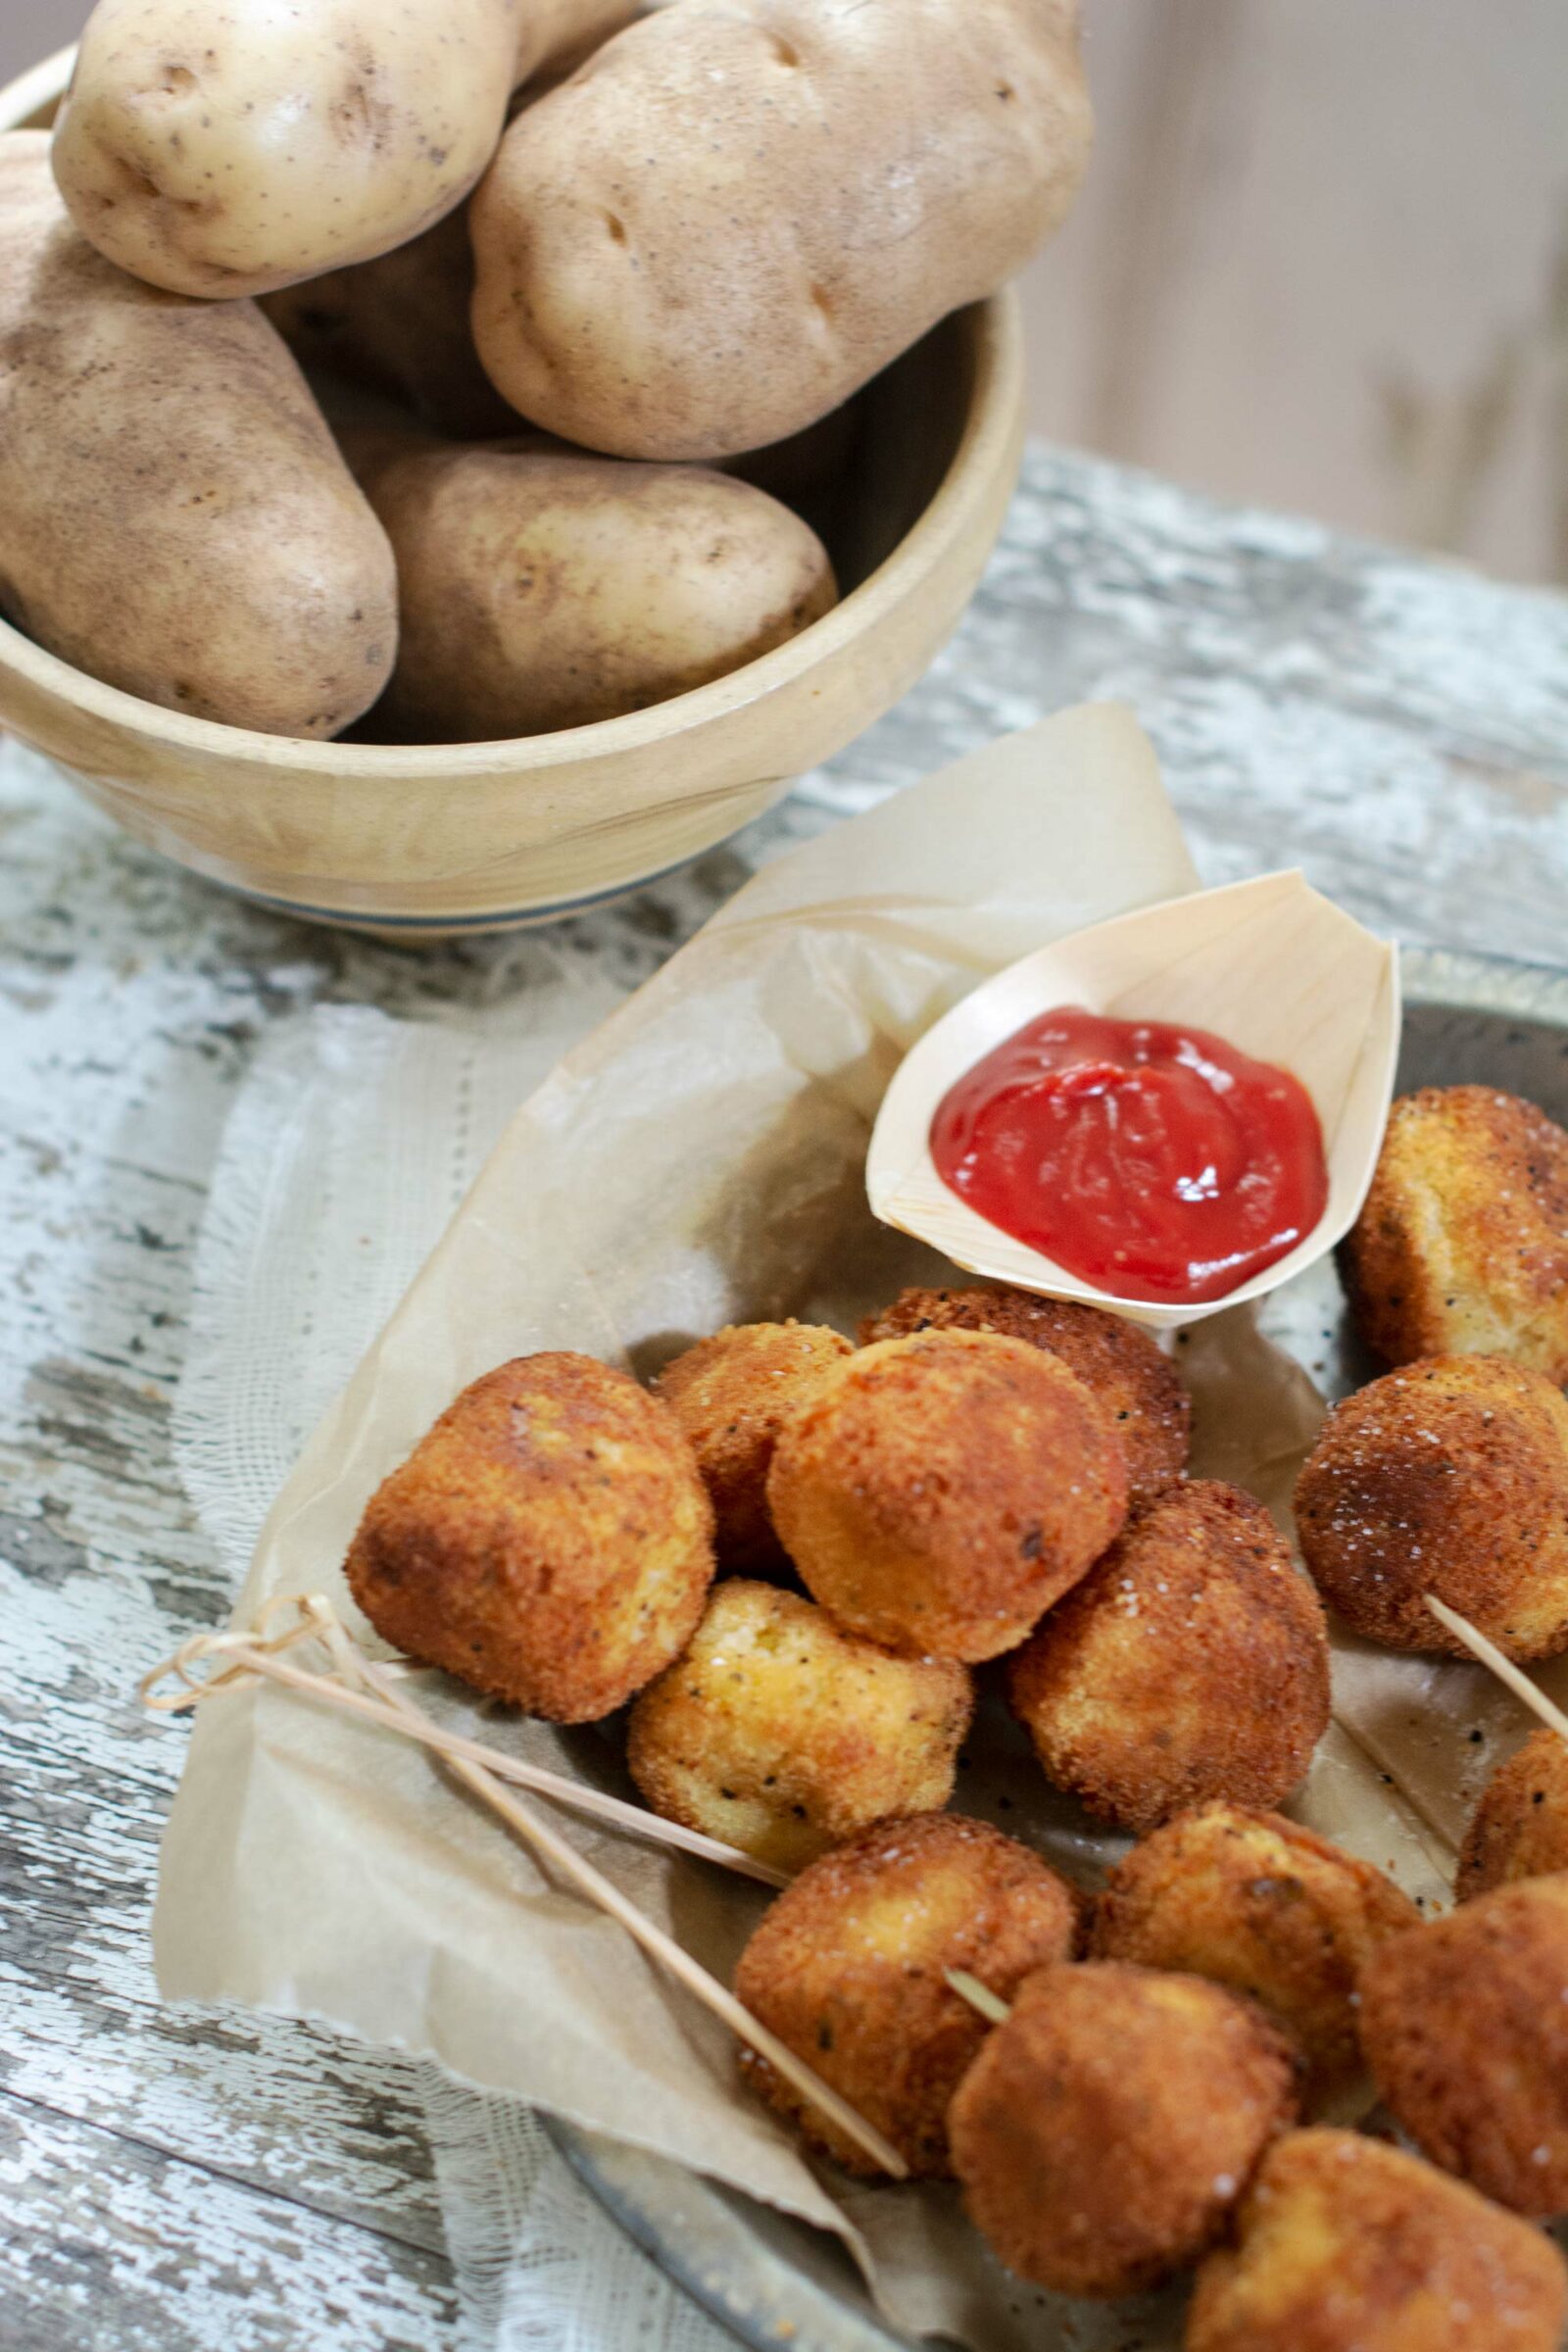 Idaho Potatoes make the ideal potato nuggets 